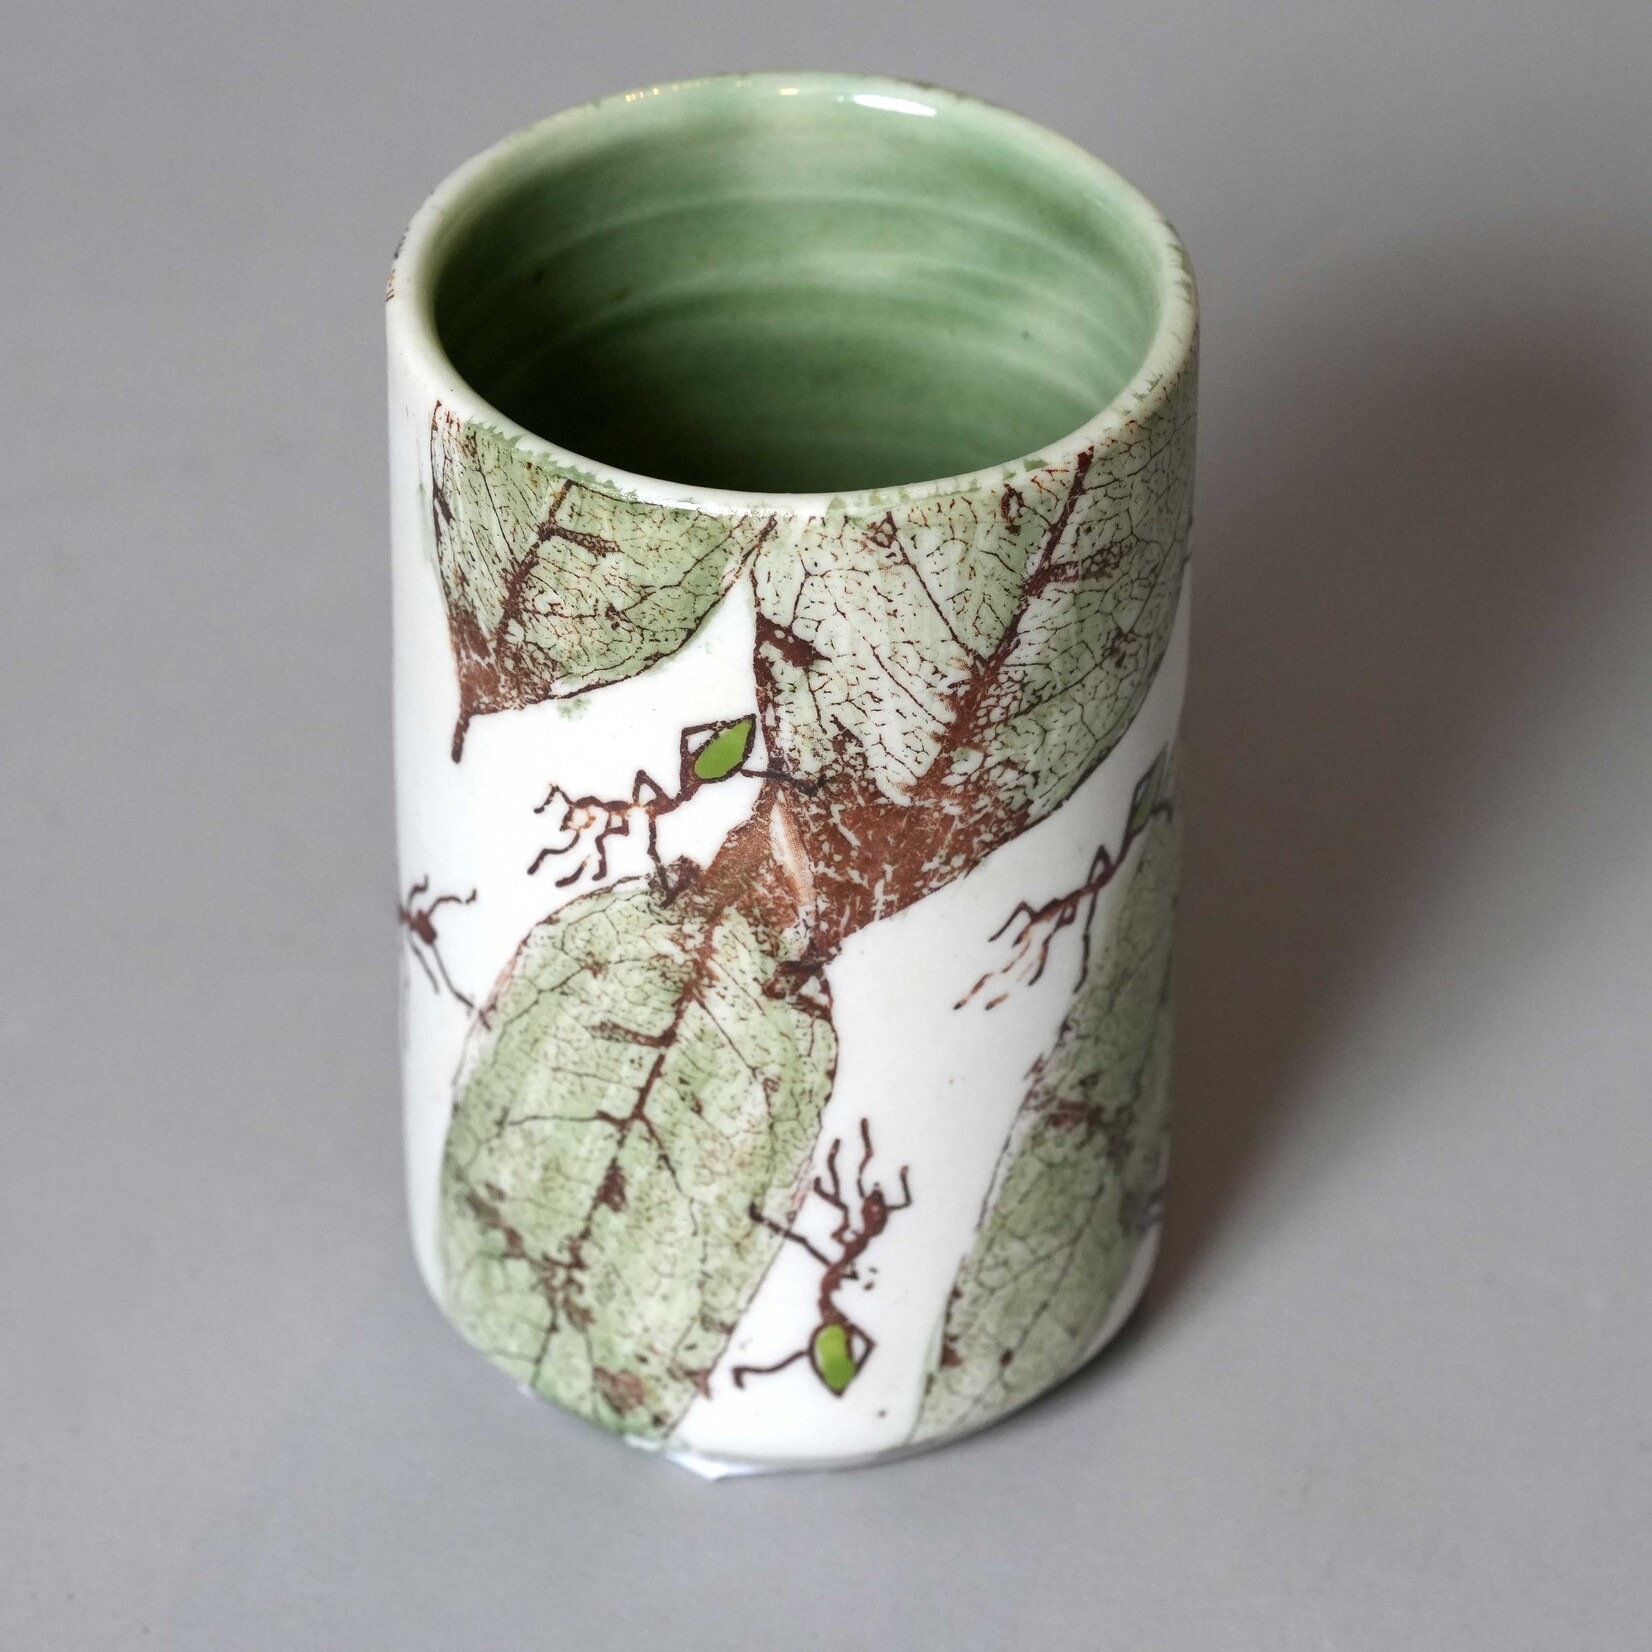 Mollie Bosworth, Vase with Green Ants | Porcelain